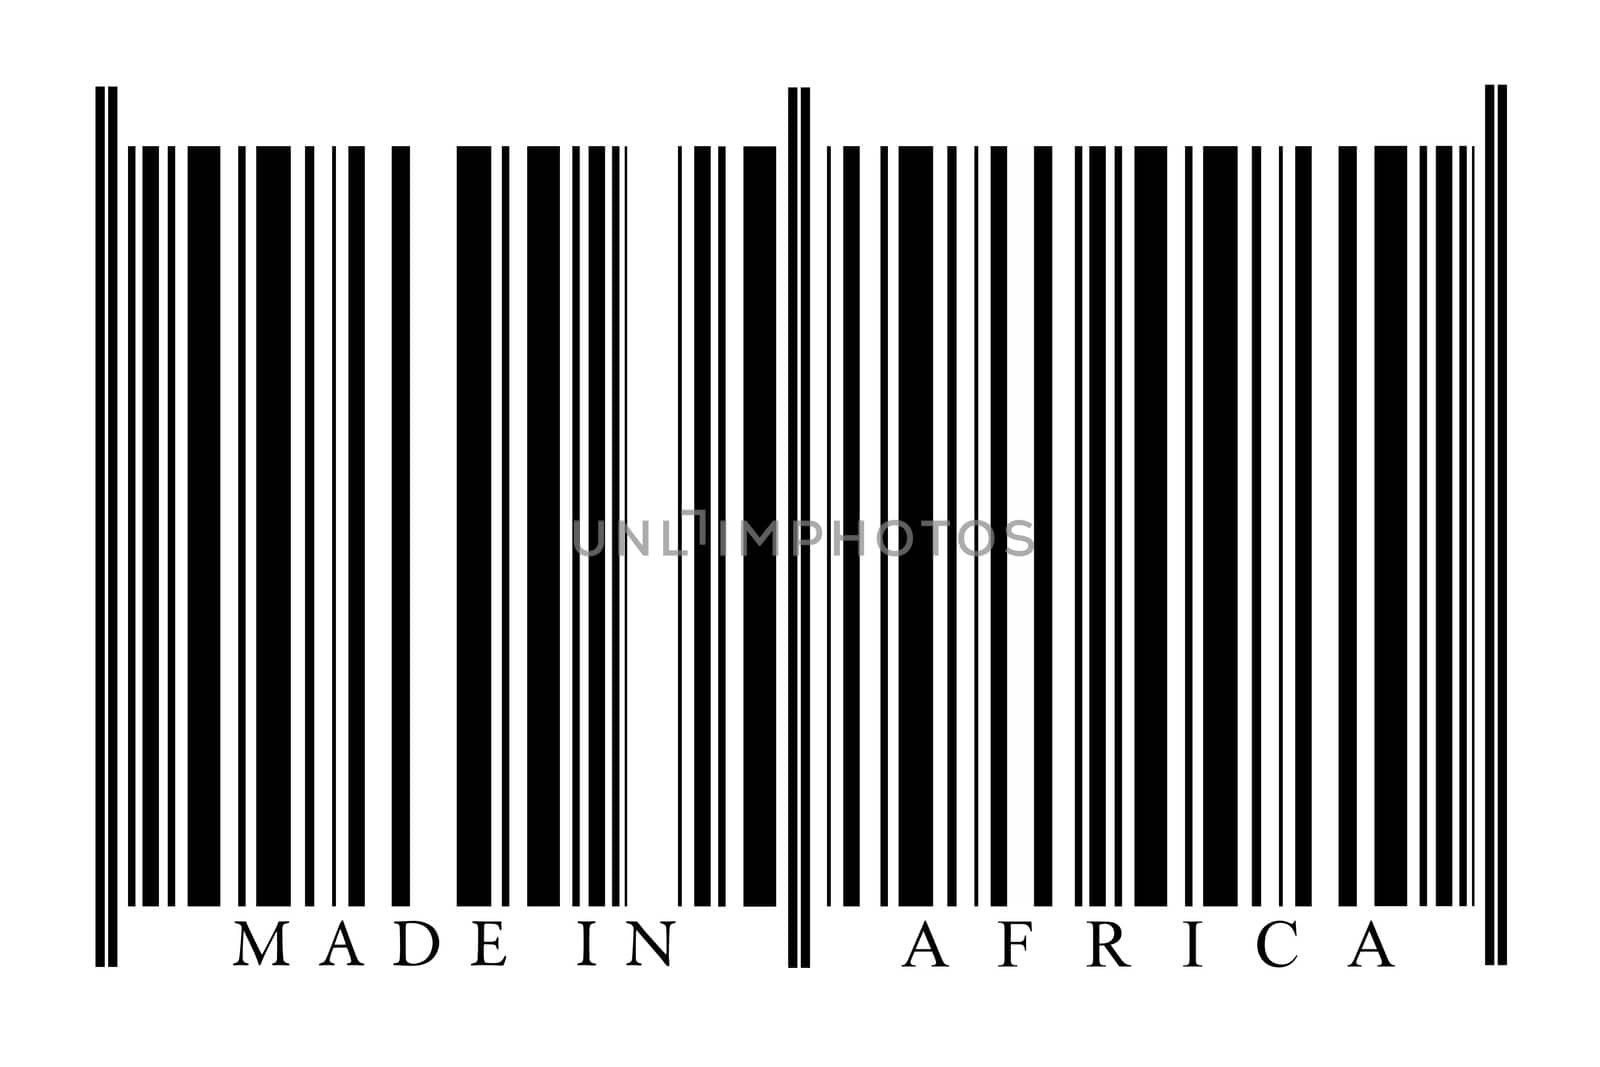 Barcode Africa by gemenacom